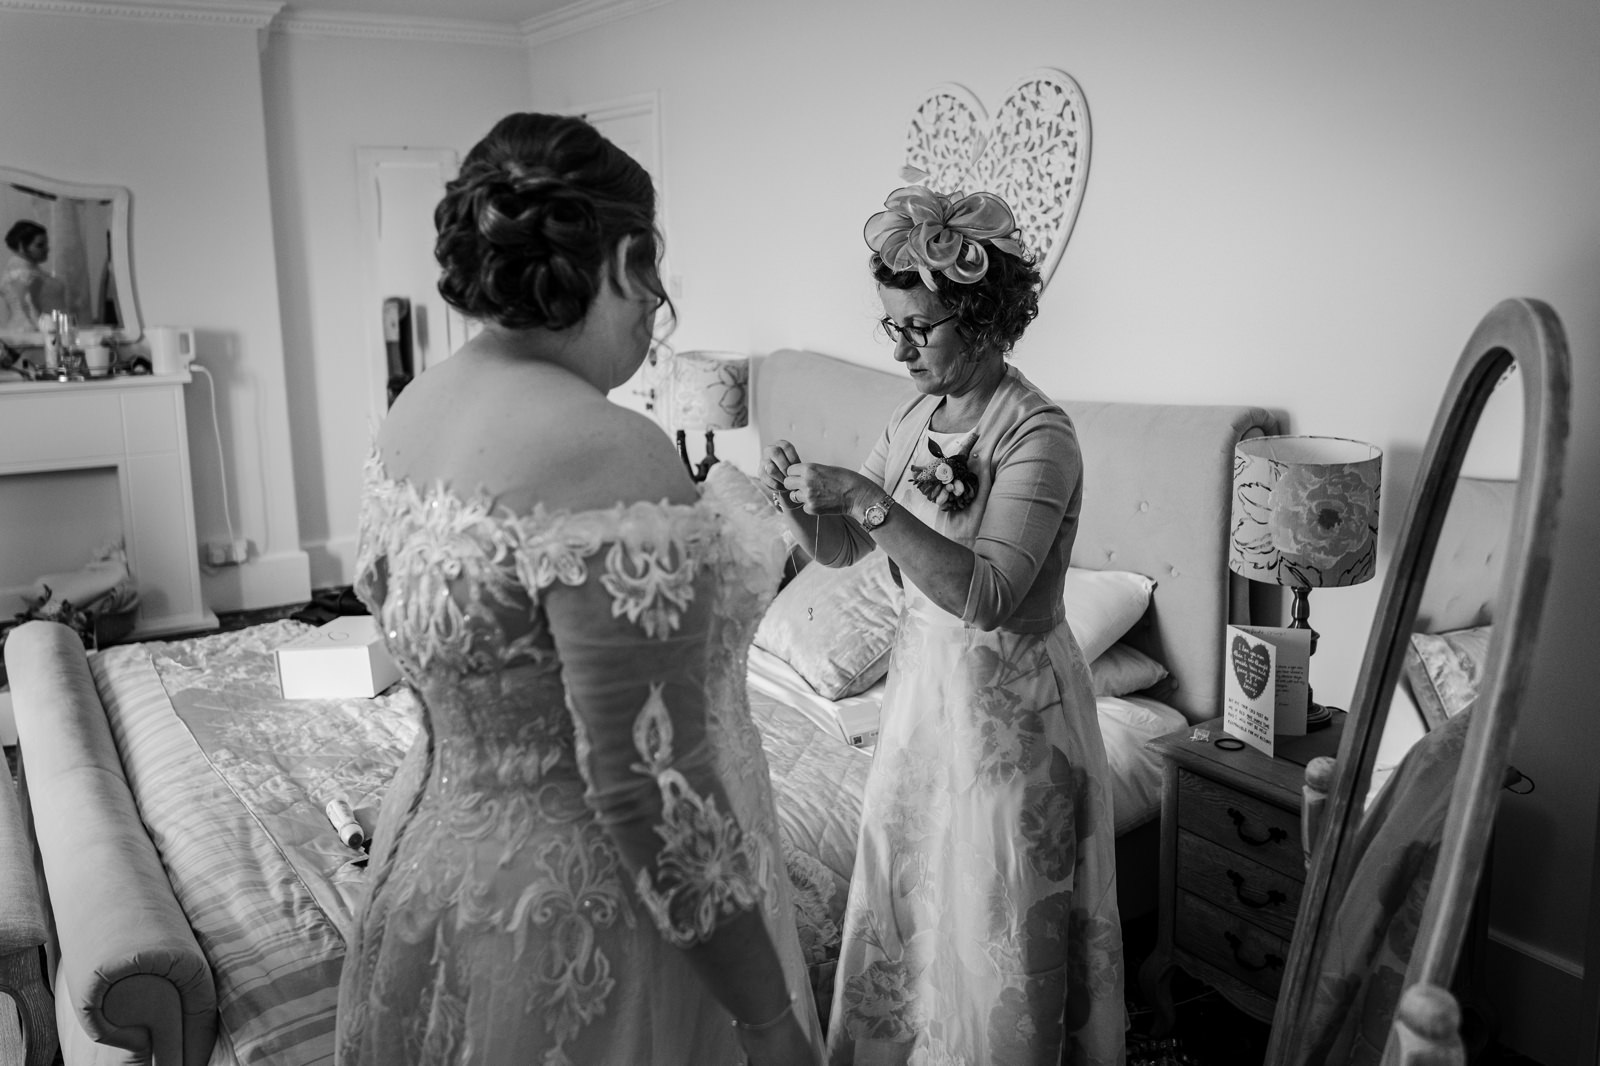 Mum helps daughter with wedding dress